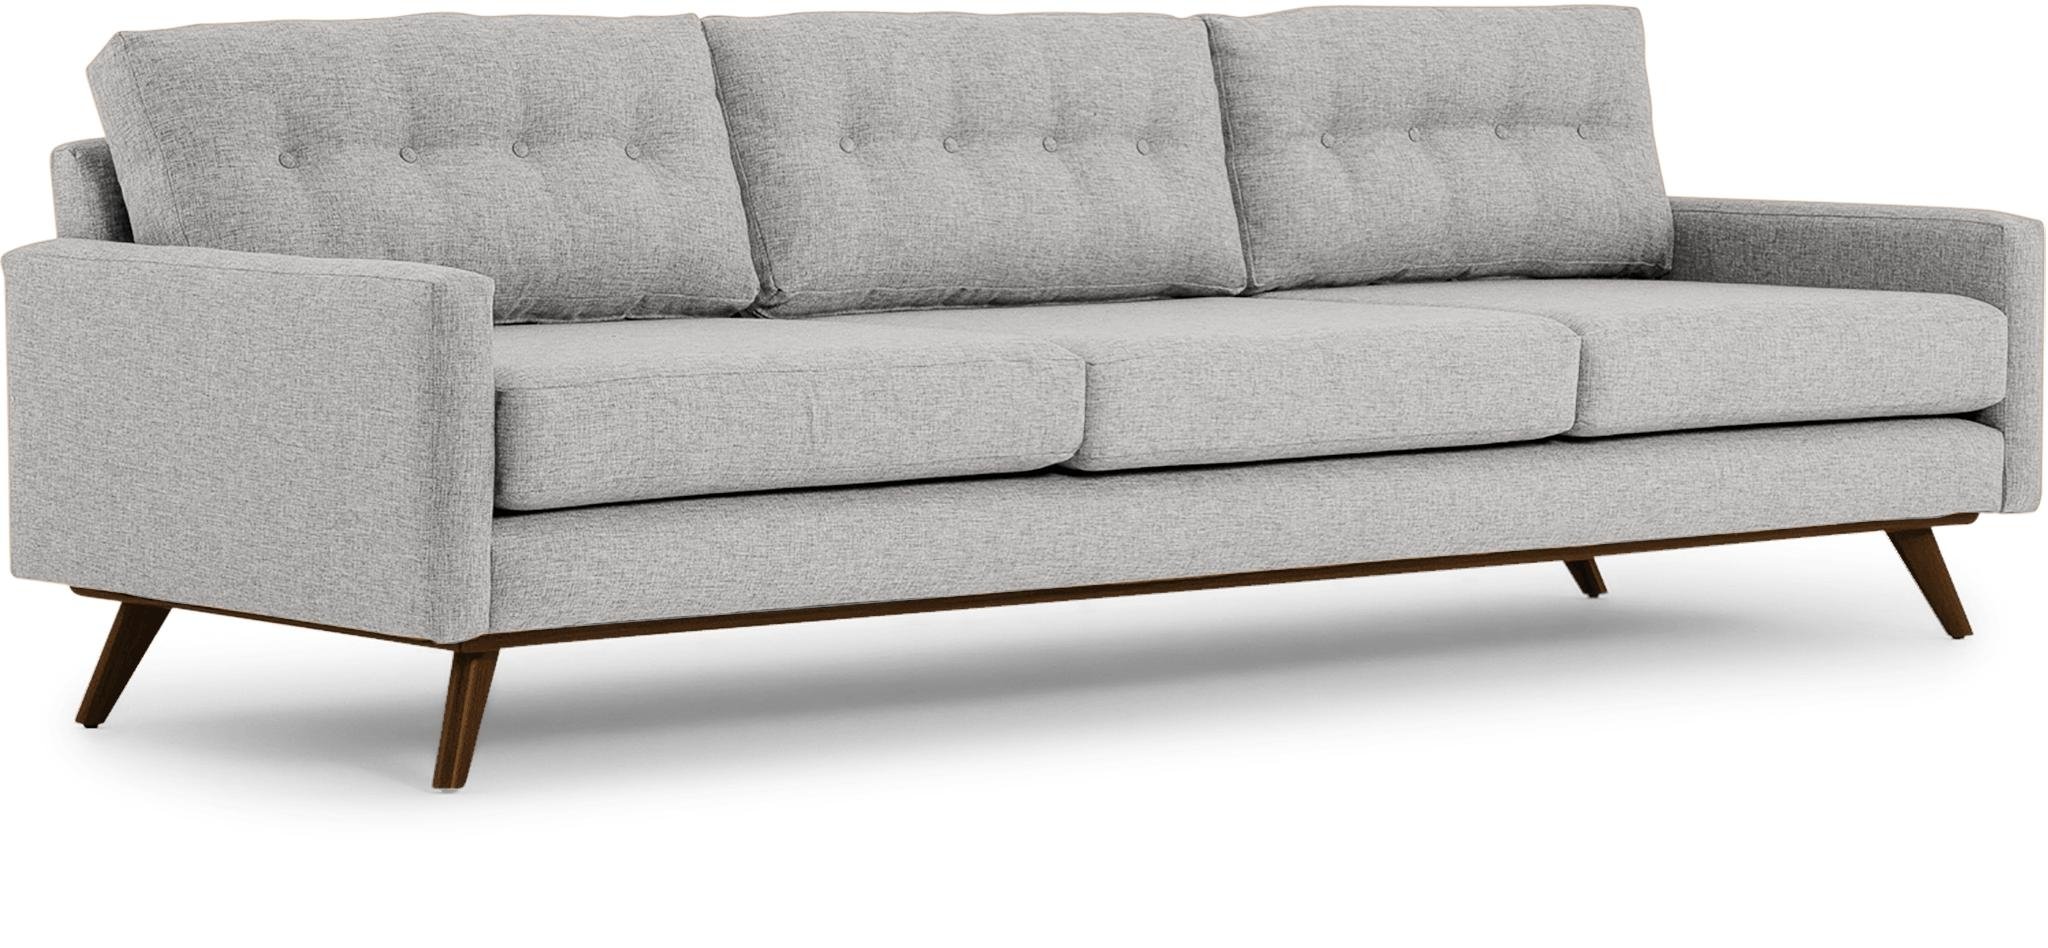 Gray Hopson Mid Century Modern Grand Sofa - Sunbrella Premier Fog - Mocha - Image 1